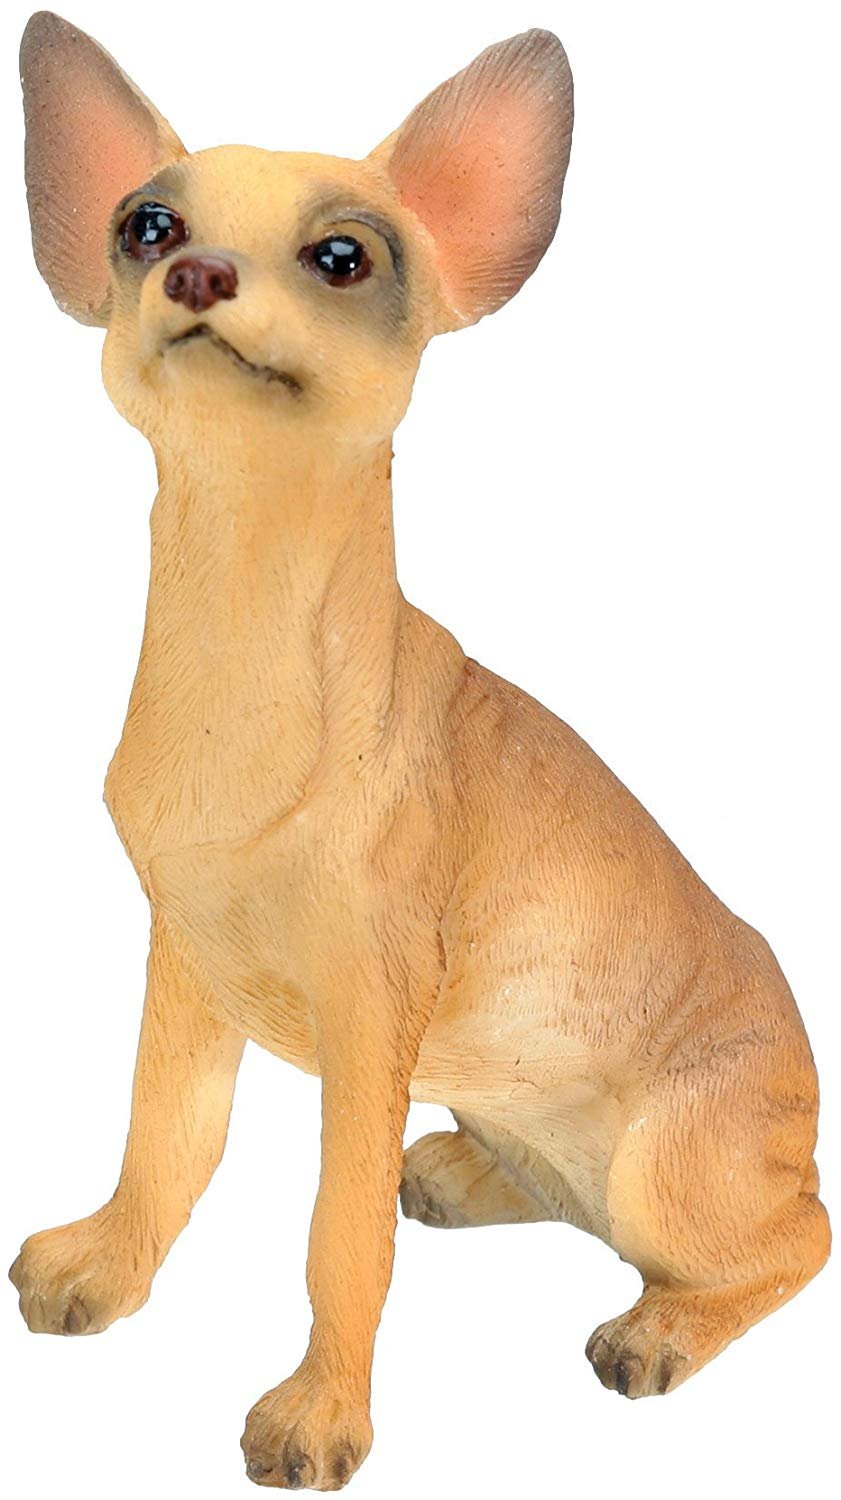 Chihuahua (Tan) Dog - Collectible Statue Figurine Figure Sculpture